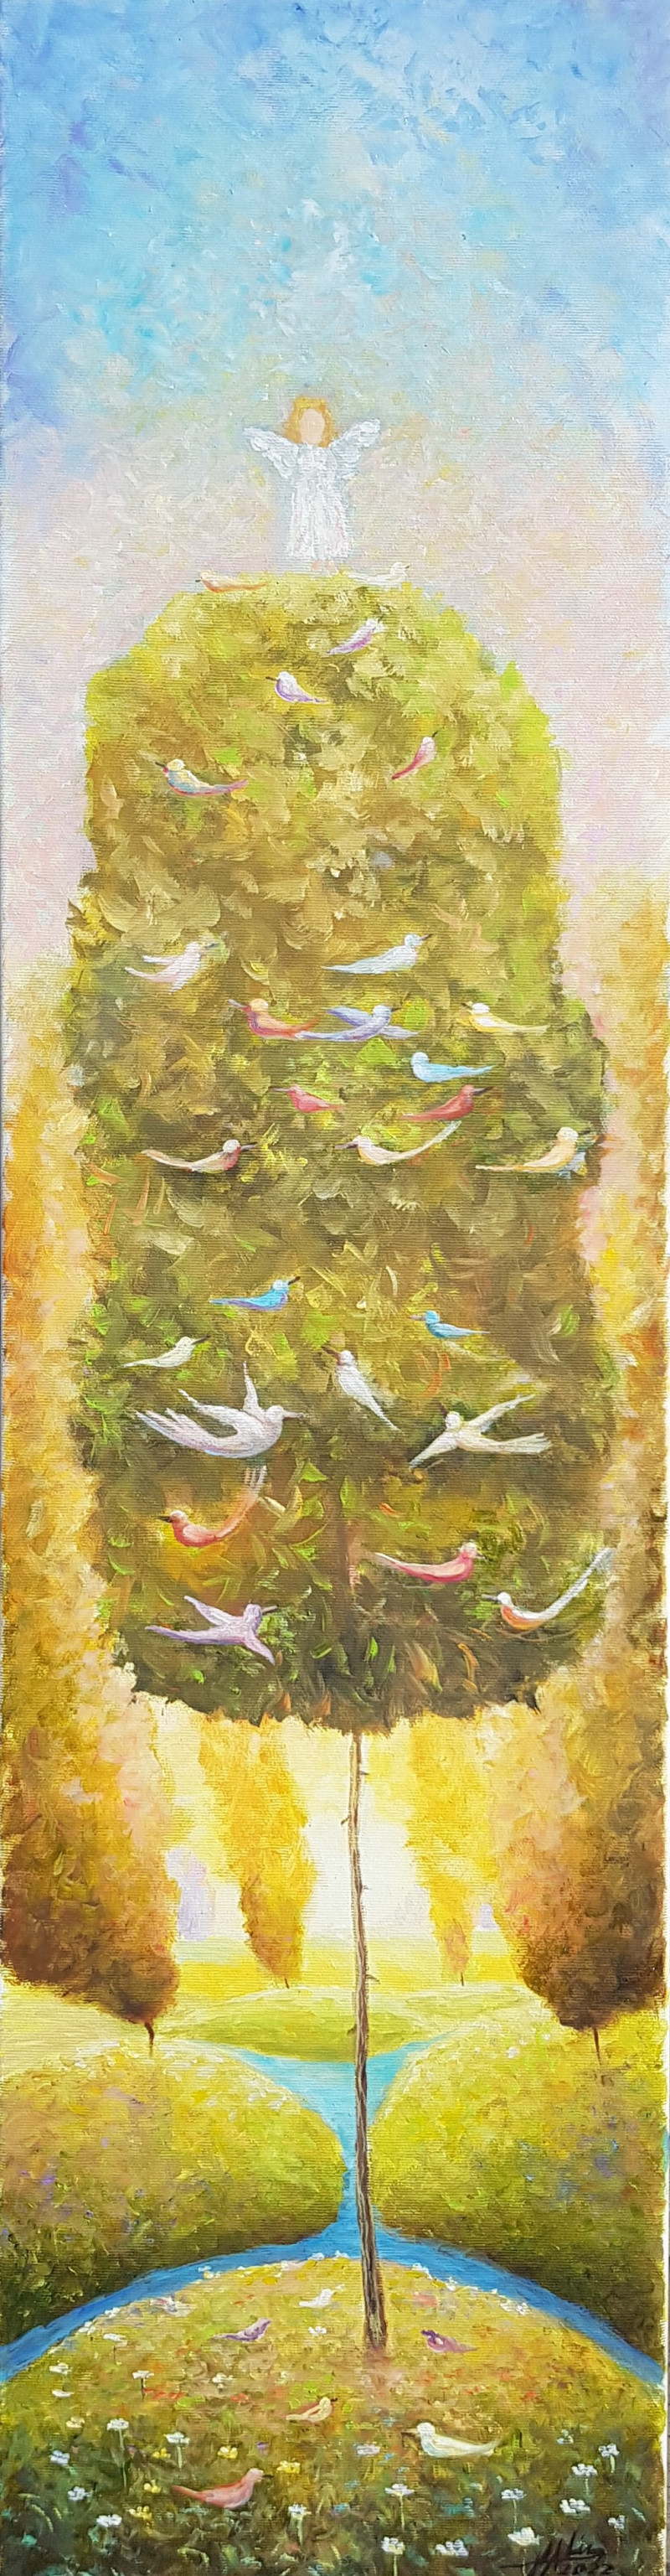 Birds Paradise original painting by Voldemaras Valius. Freed Fantasy